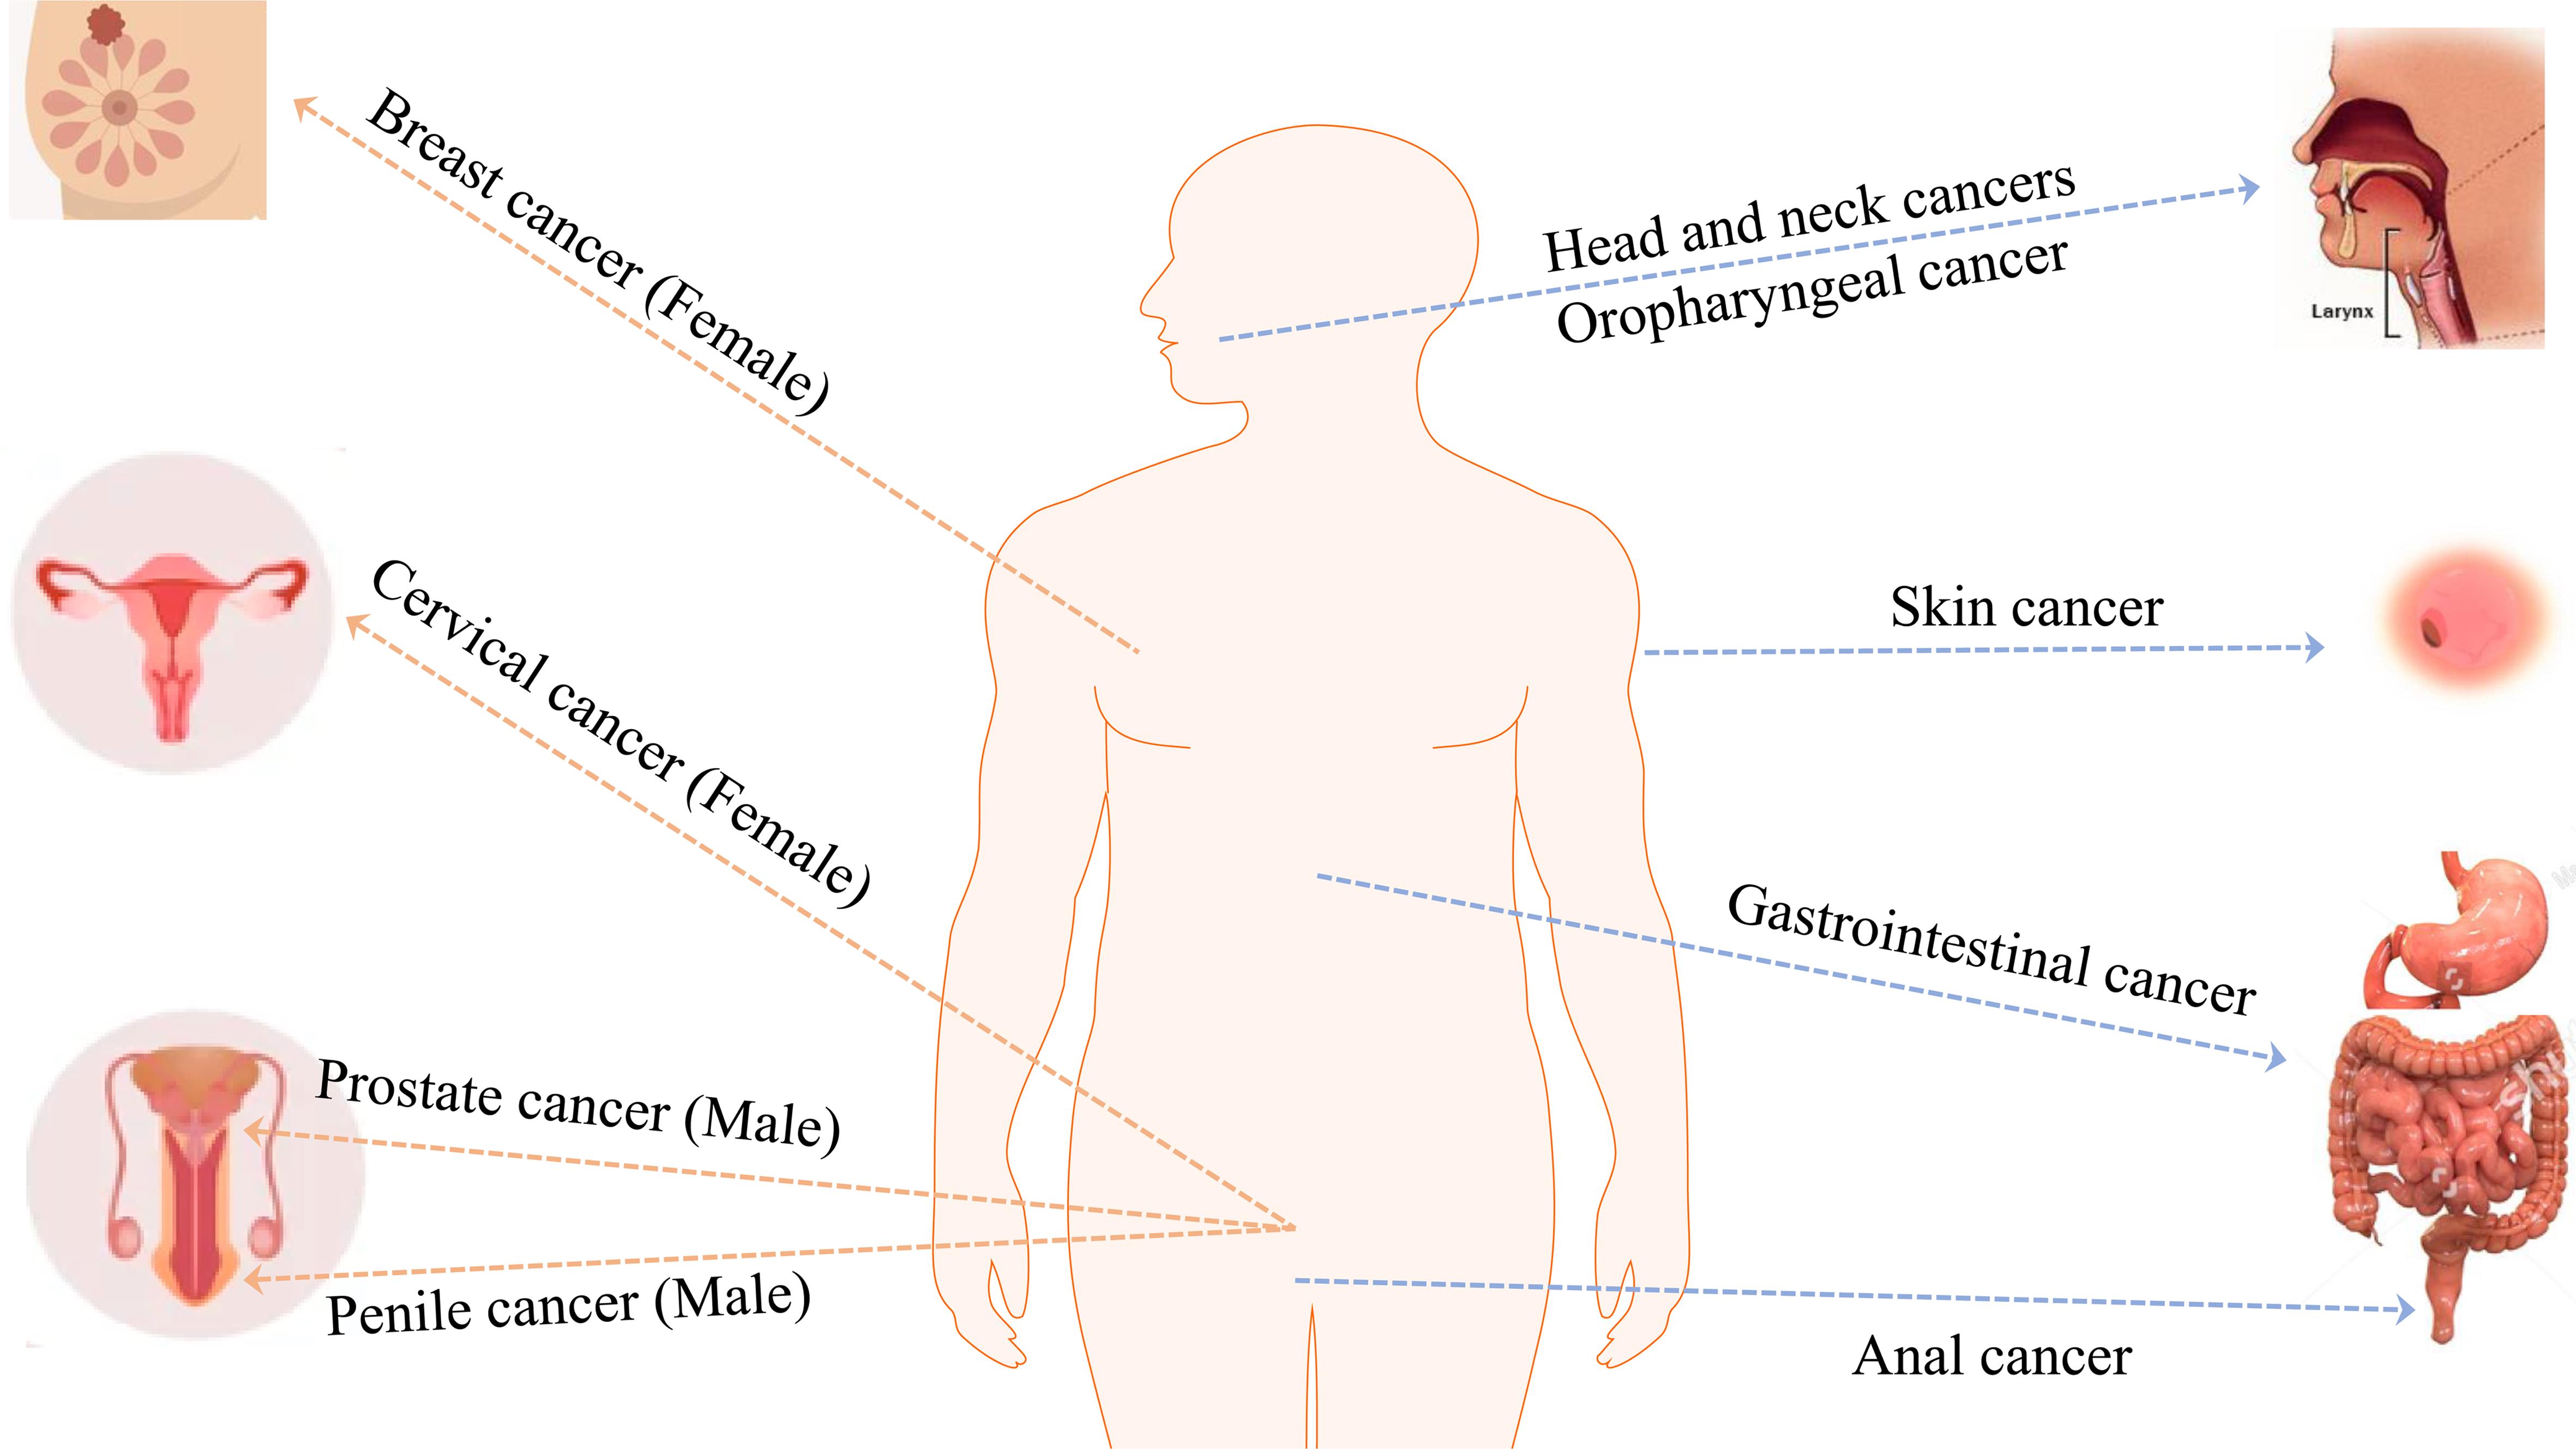 Association of human papillomavirus with various cancers.